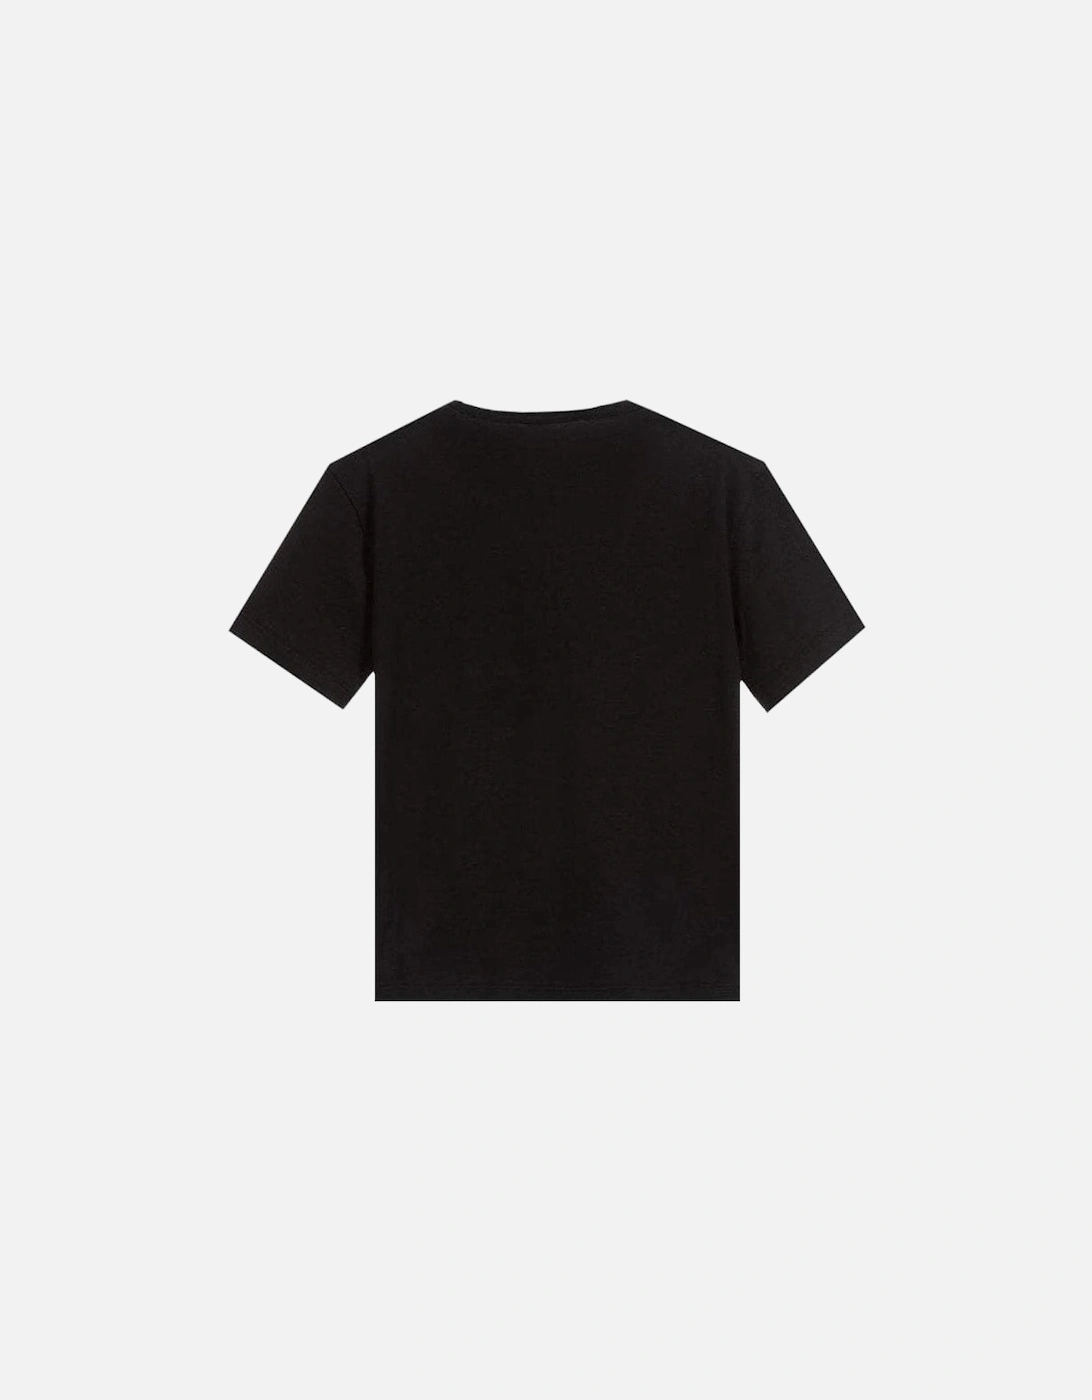 Boys Crown Cotton T-Shirt Black